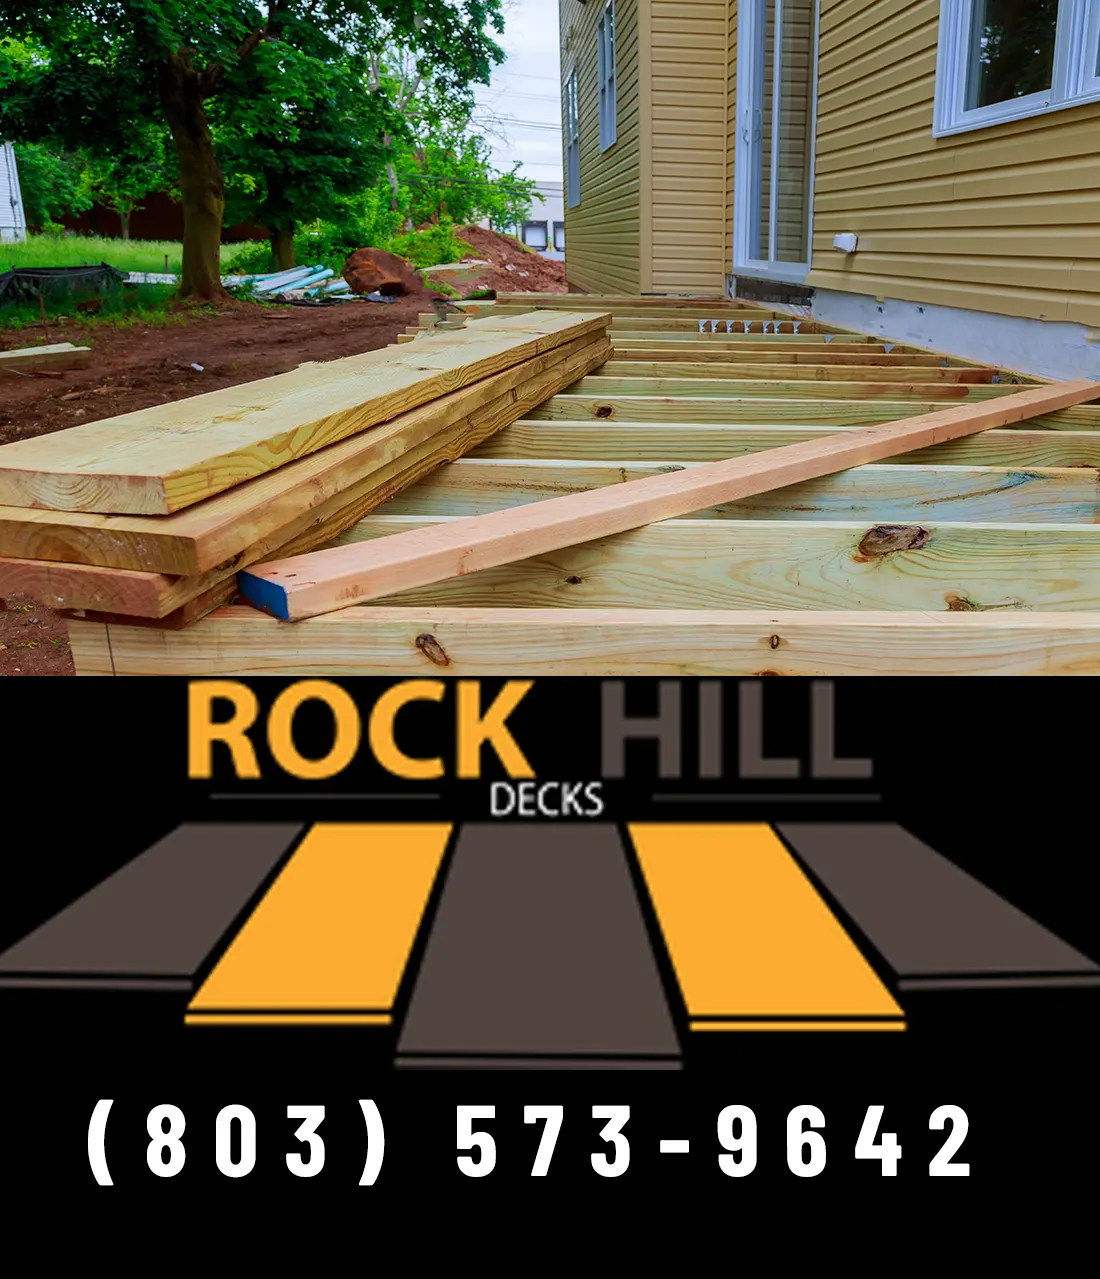 Finding the best deck builder in Rock Hill, SC